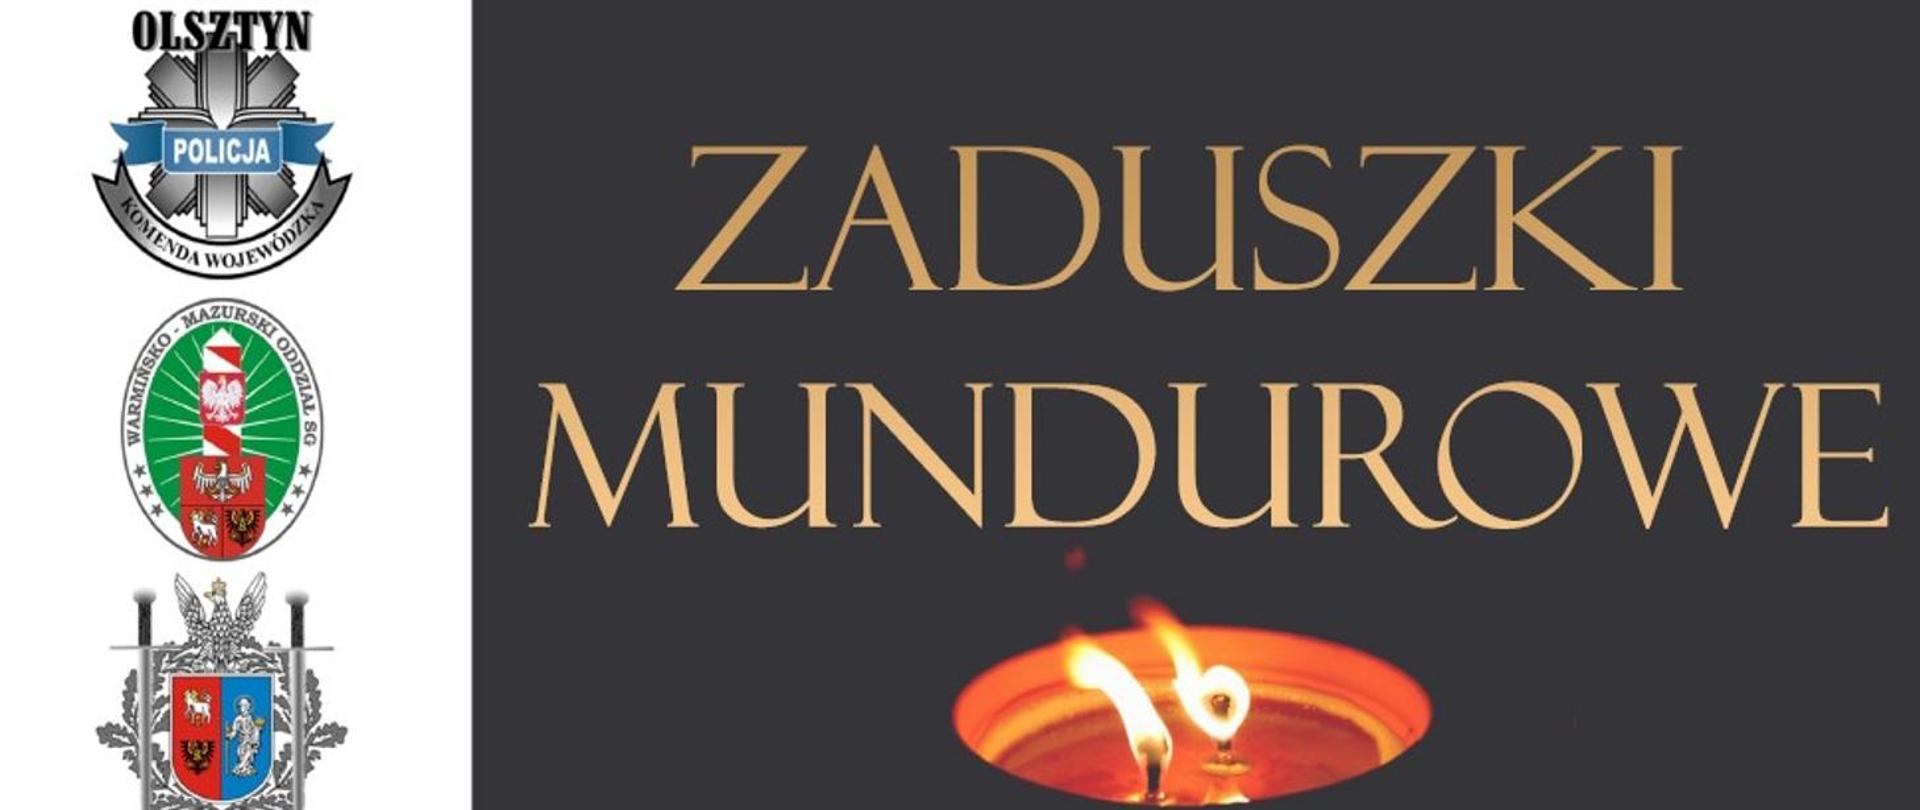 Plakat - Zaduszki Mundurowe
